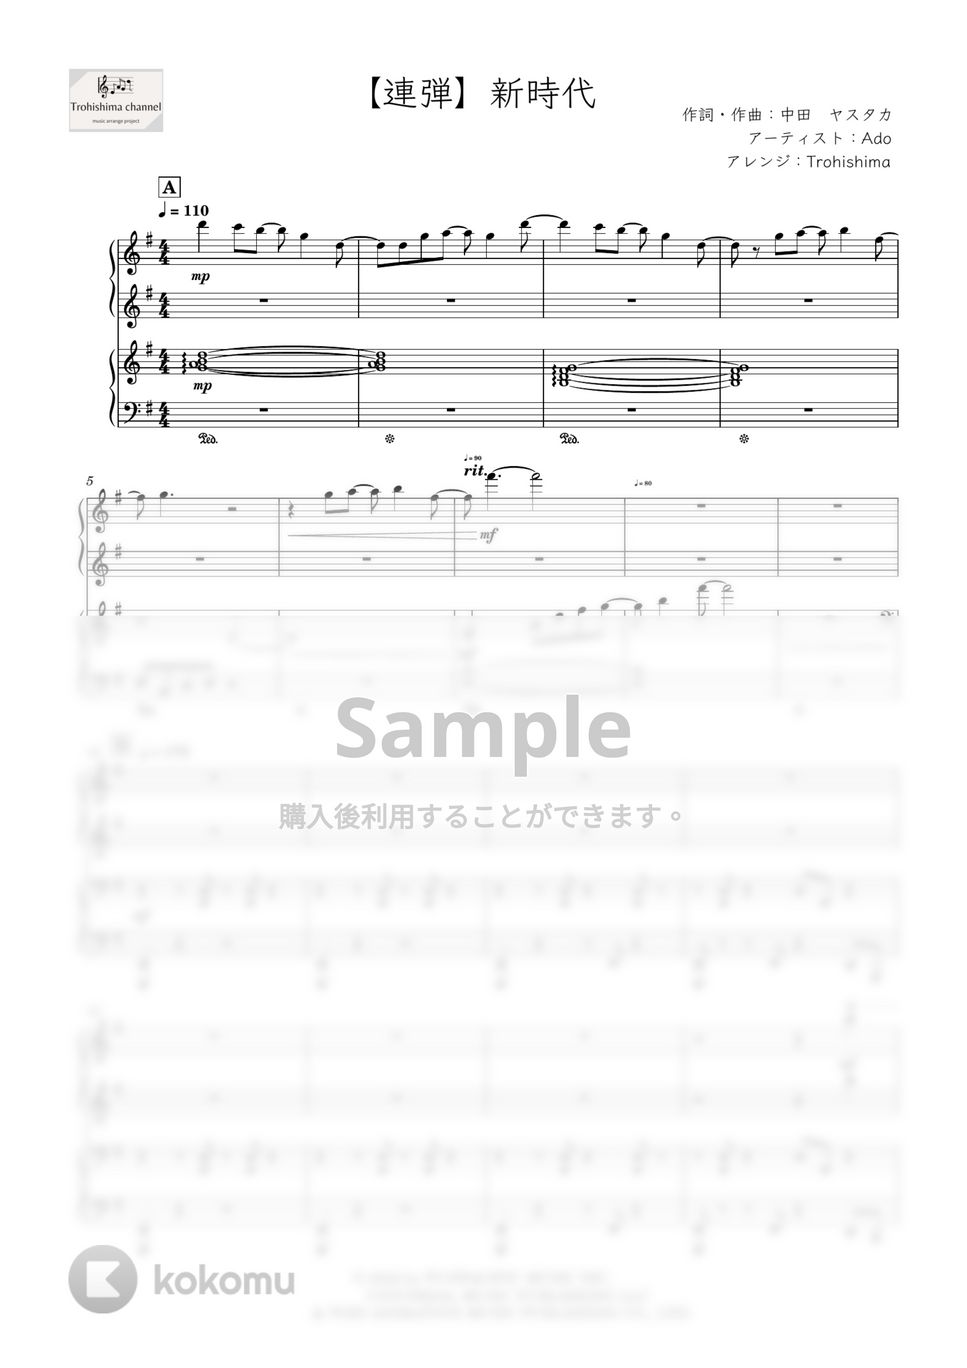 Ado - 新時代 (ピアノ連弾/ウタ from ONE PIECE FILM RED) by Trohishima